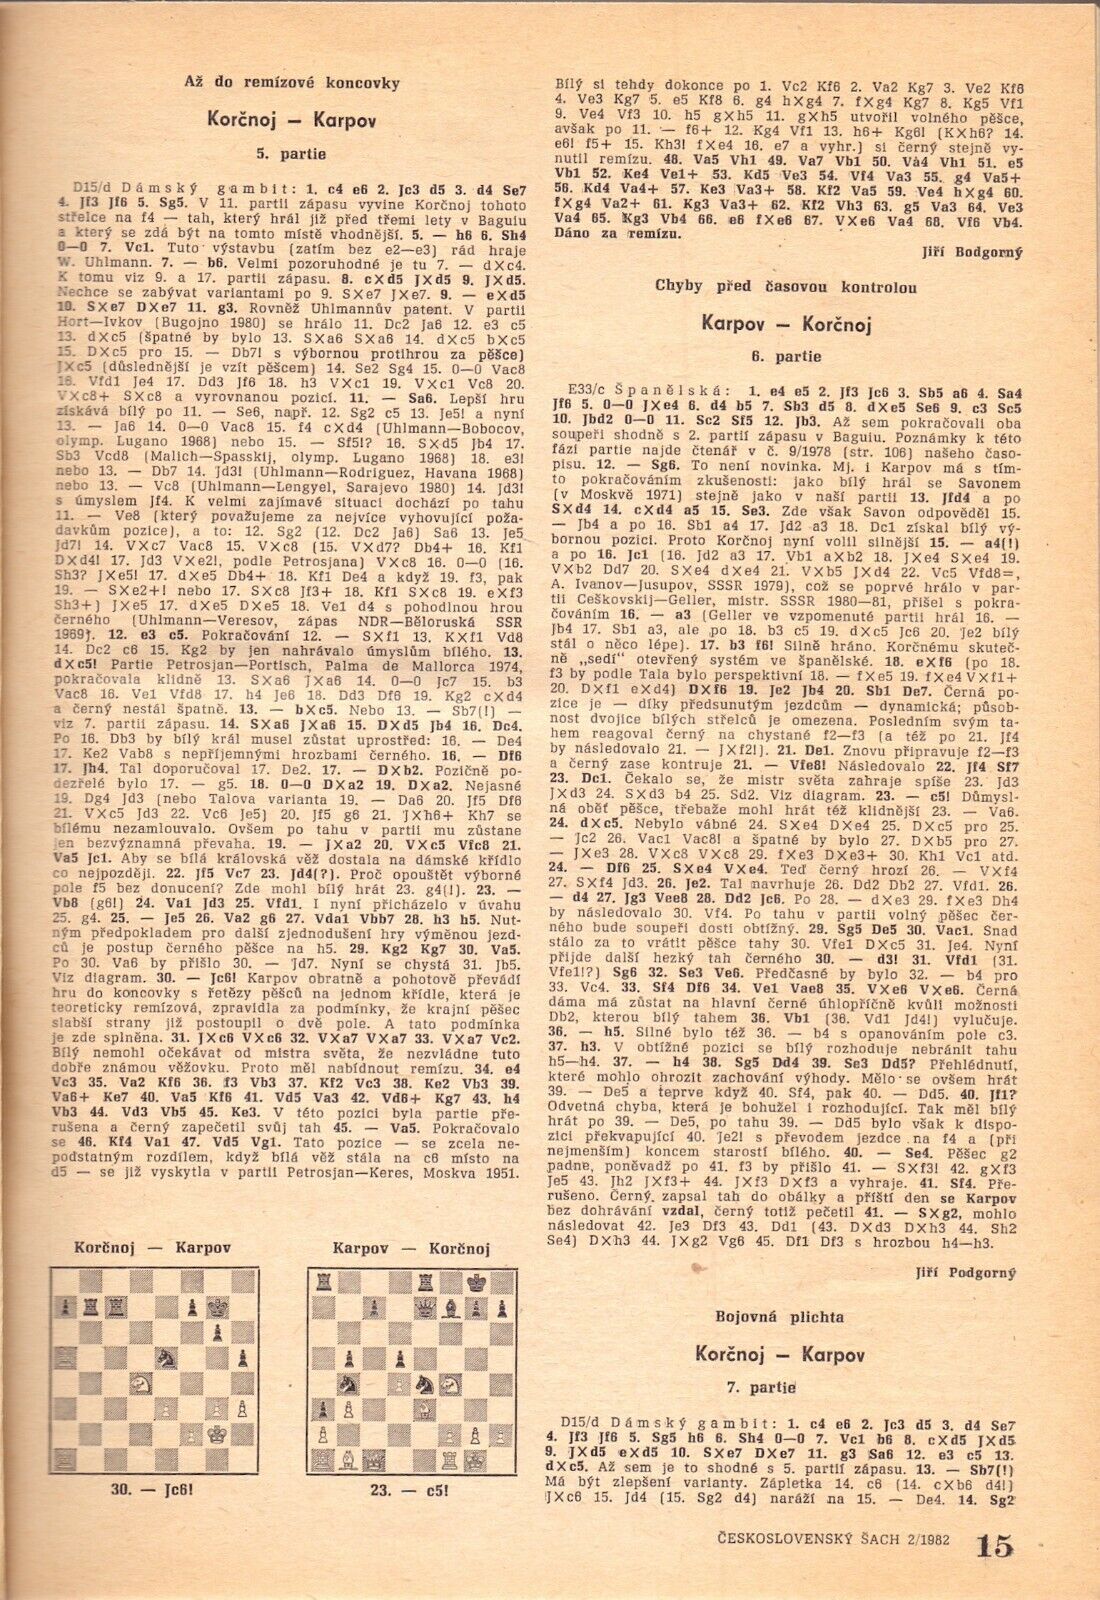 11262.Czech chess magazine «Československy šach». Annual sets 1981 and 1982